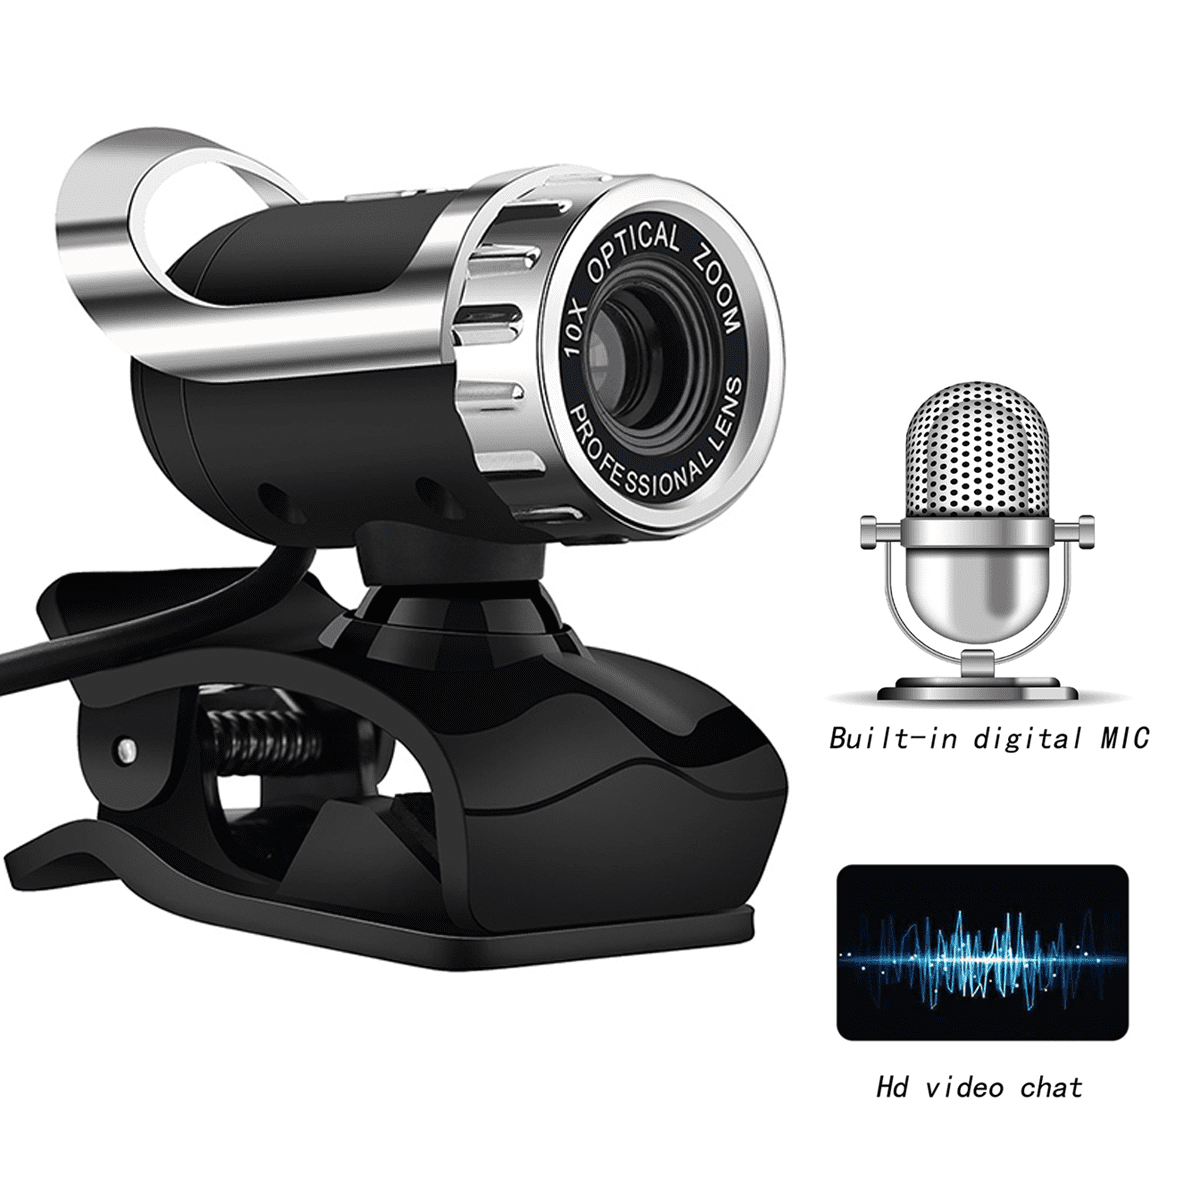 1080P HD Webcam, 1200 Megapixel USB 2.0 Clip-on Digital Video HD Web Camera for Desktop PC Laptop Skype with Built-in Sound Absorption Microphone